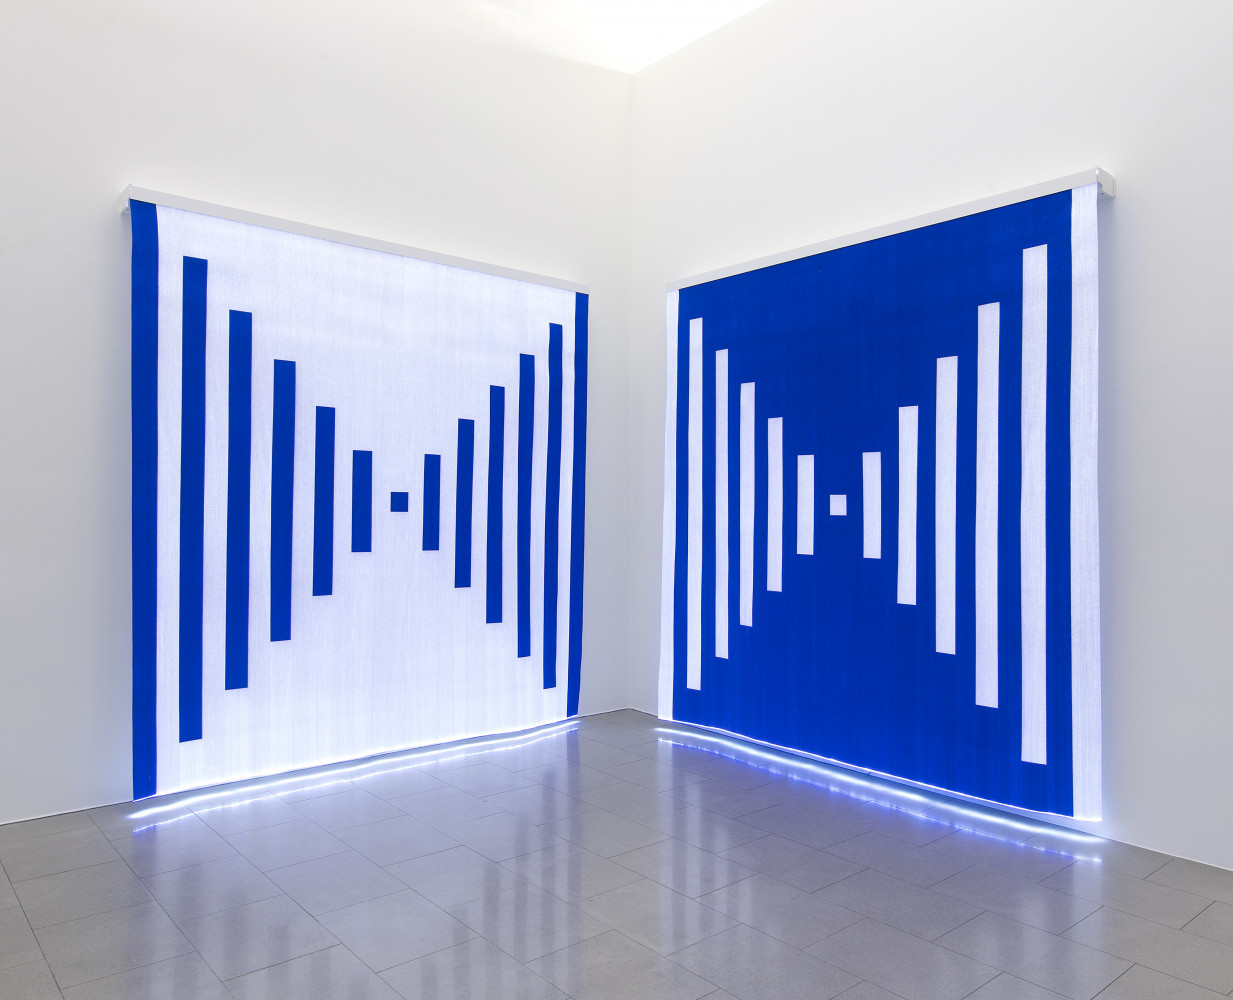 Daniel Buren, ‘Fibres optiques - Bleu foncé. Diptyque K1+K2, 2013’, Fiber optic fabric, LED (white, dark blue), steel